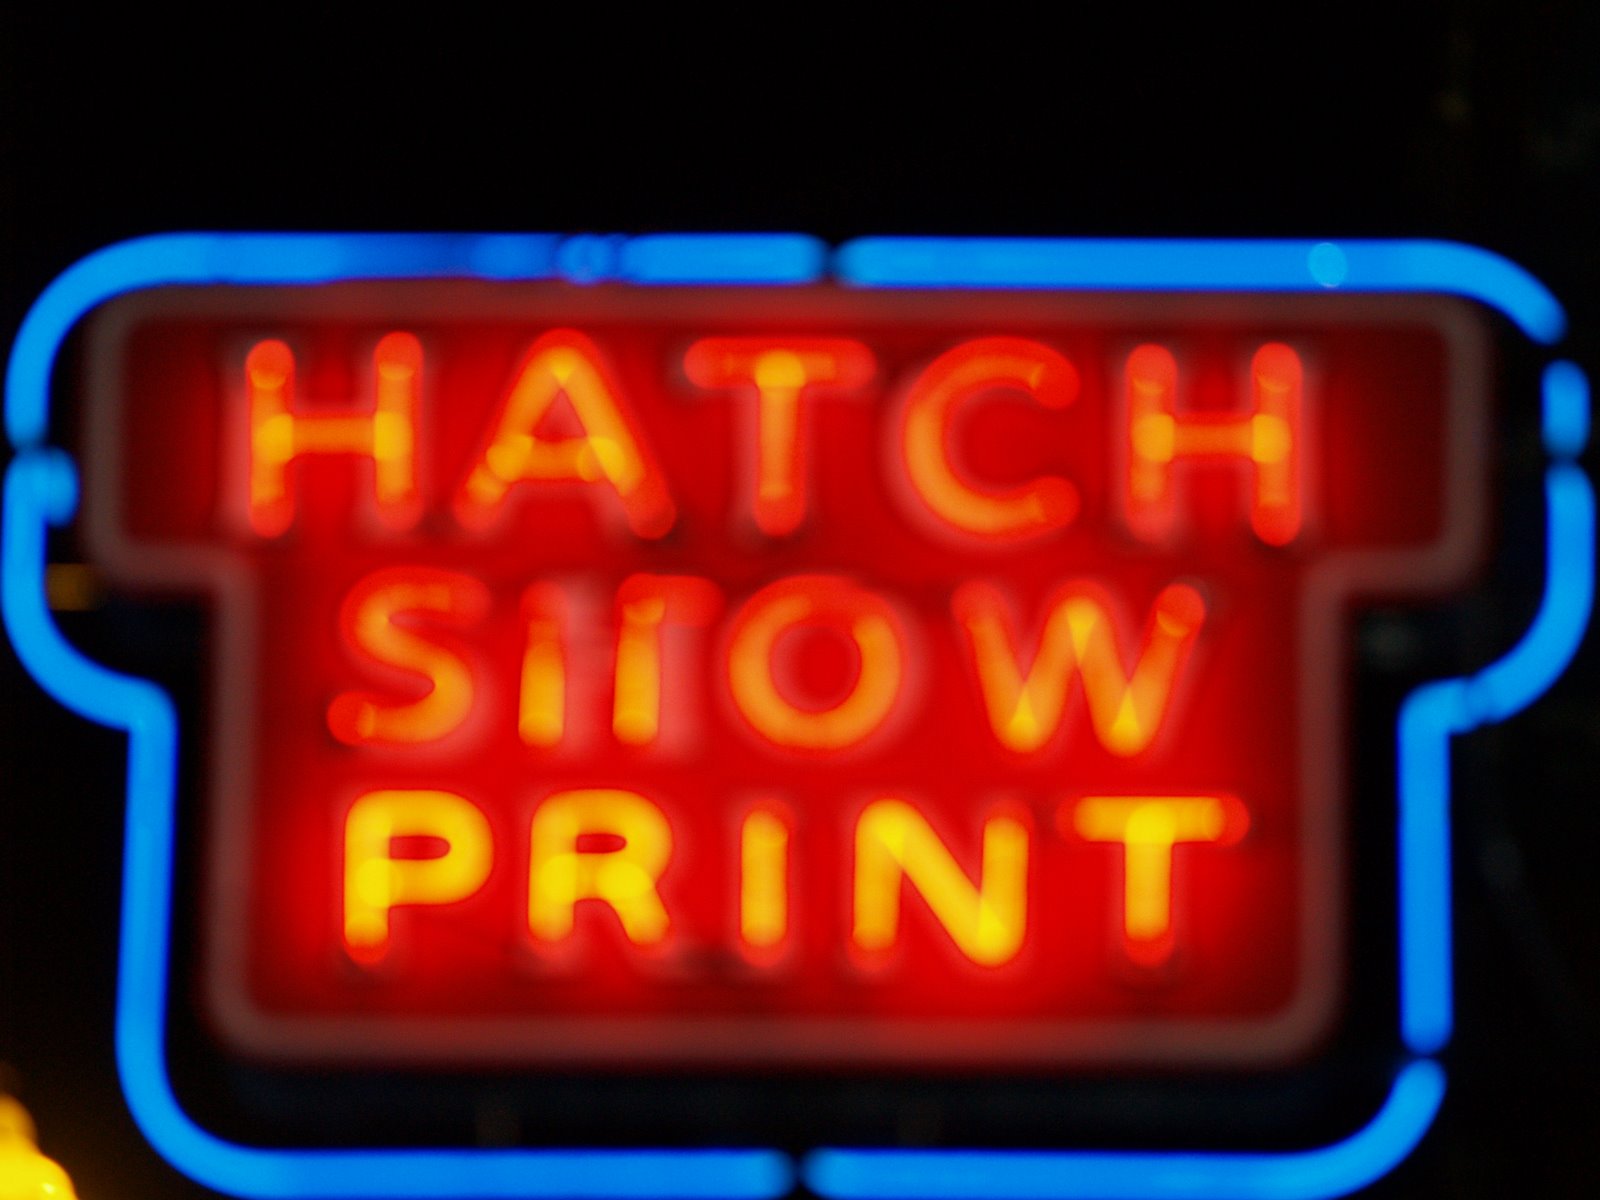 [Hatch+Show+Print-1.JPG]